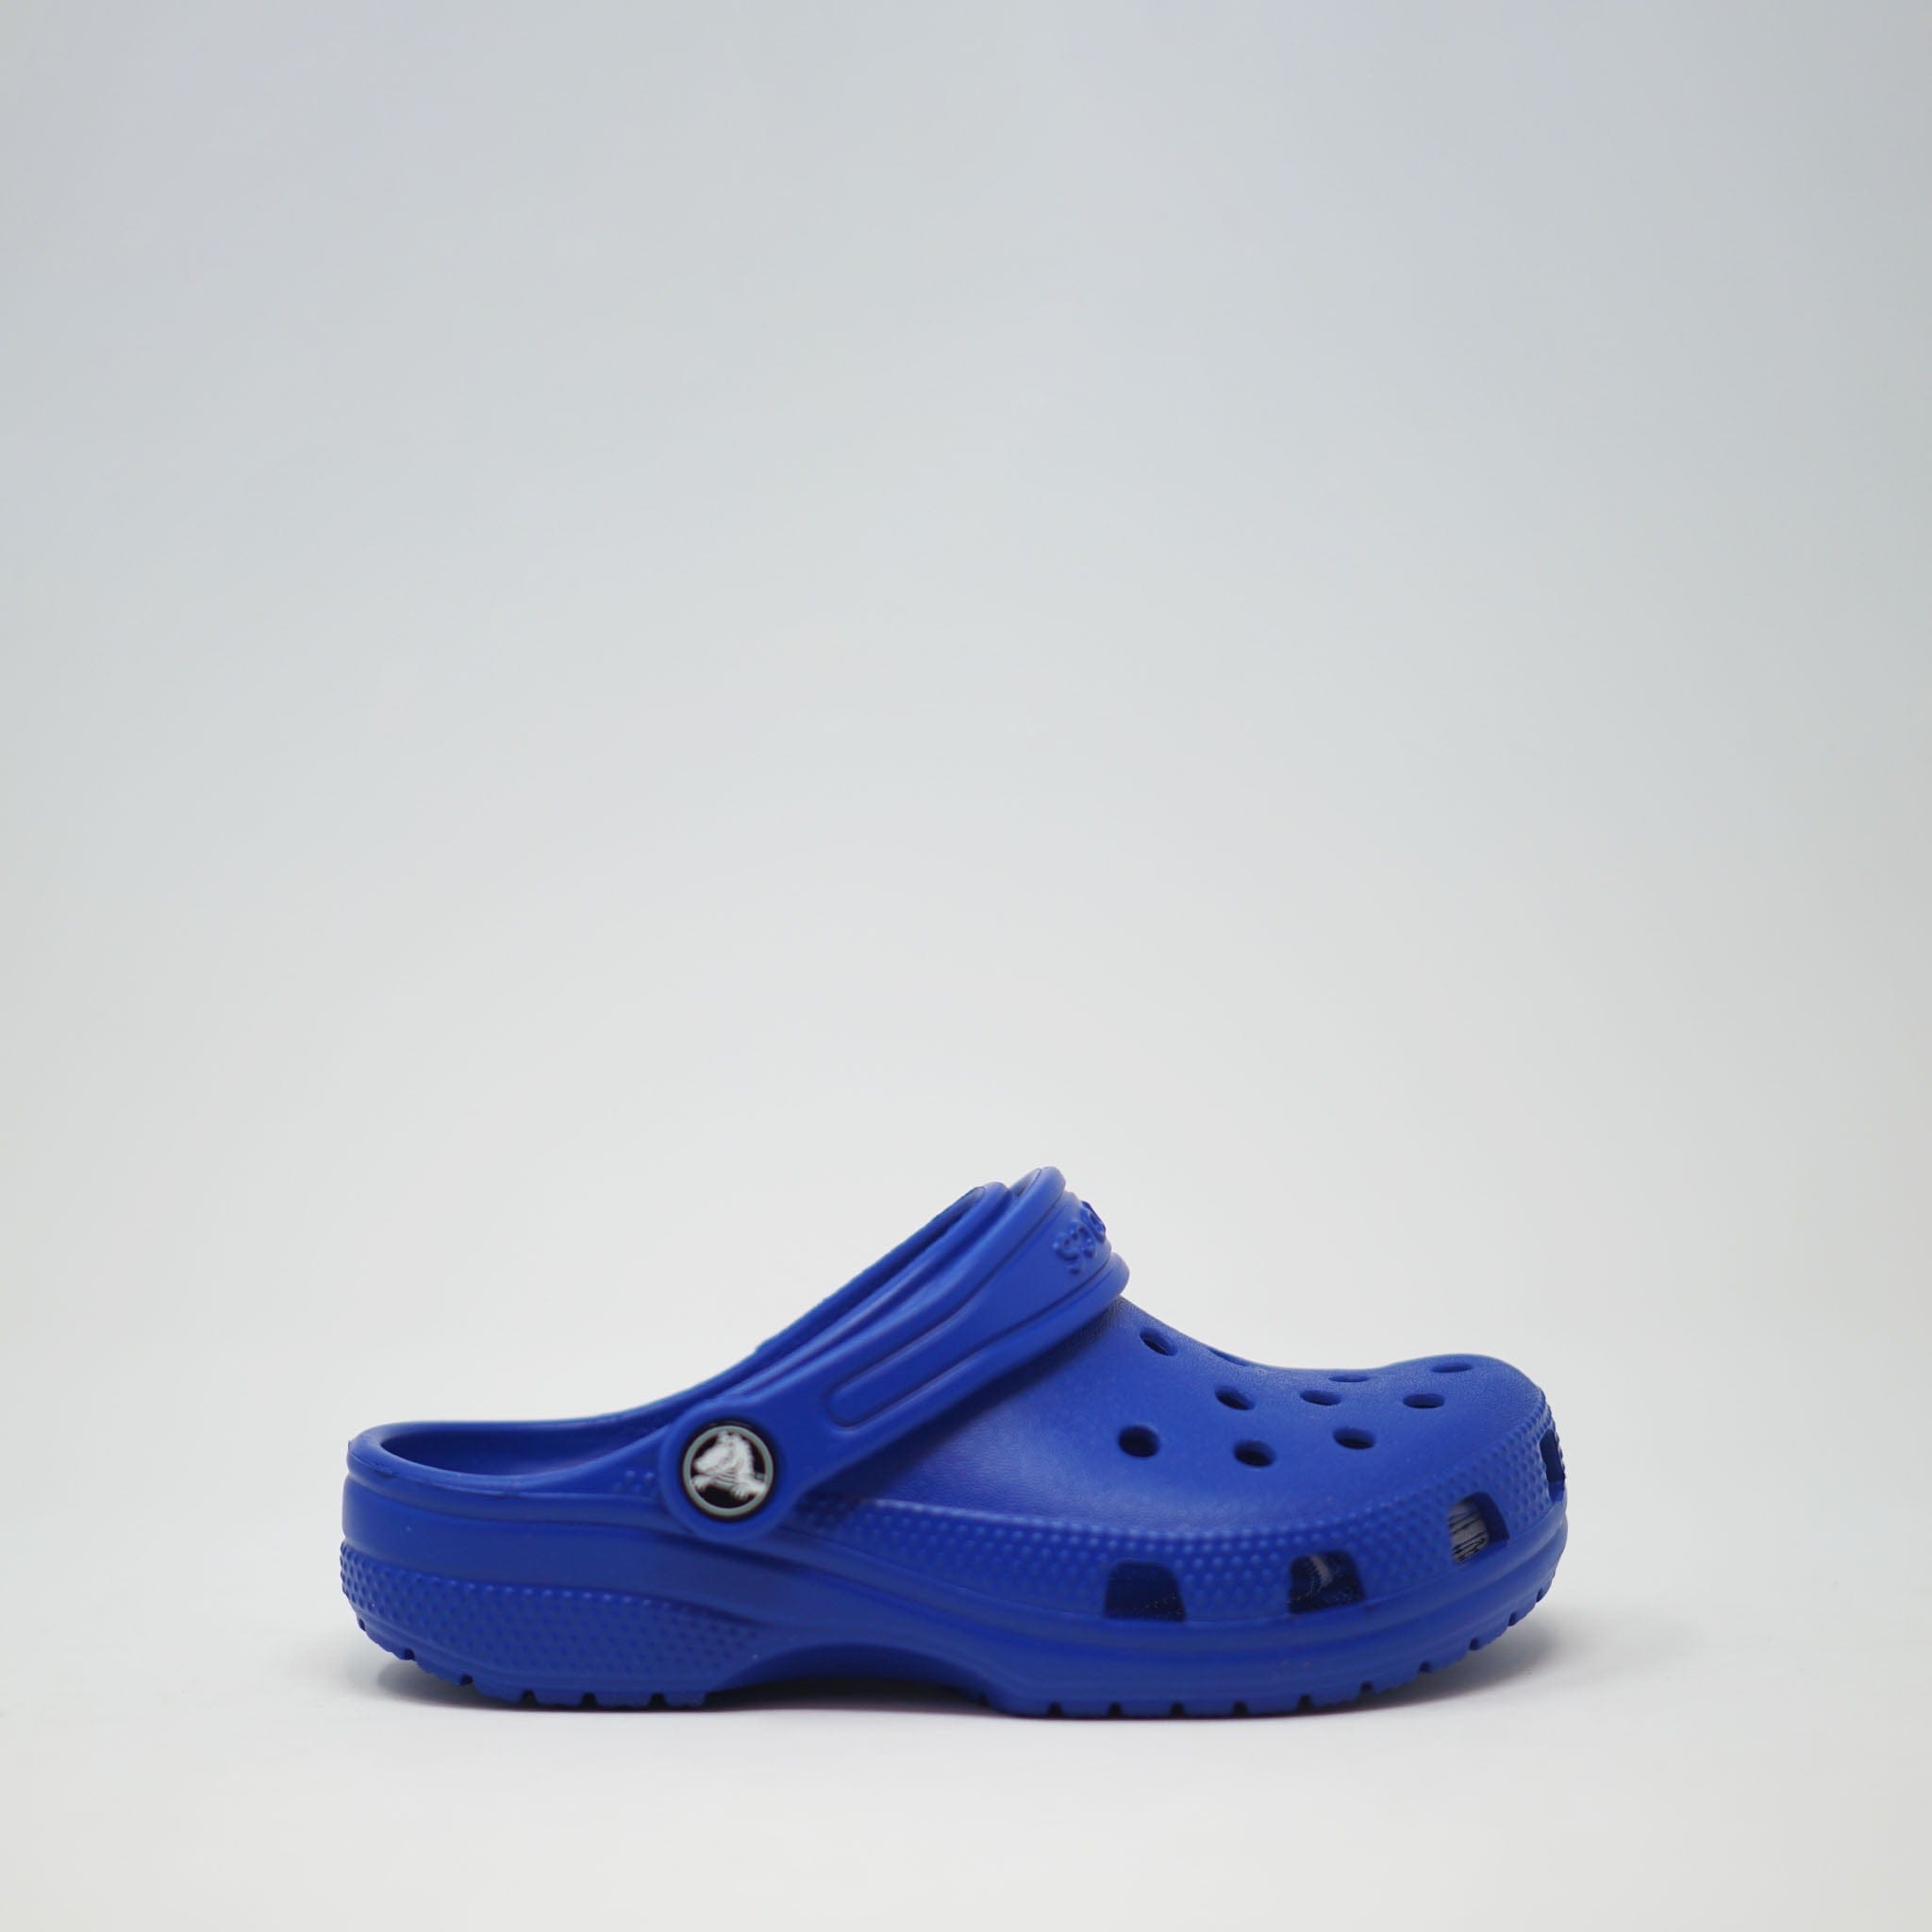 Toddler Classic Crocs Blue Bolt SHOES  - ZIGZAG Footwear